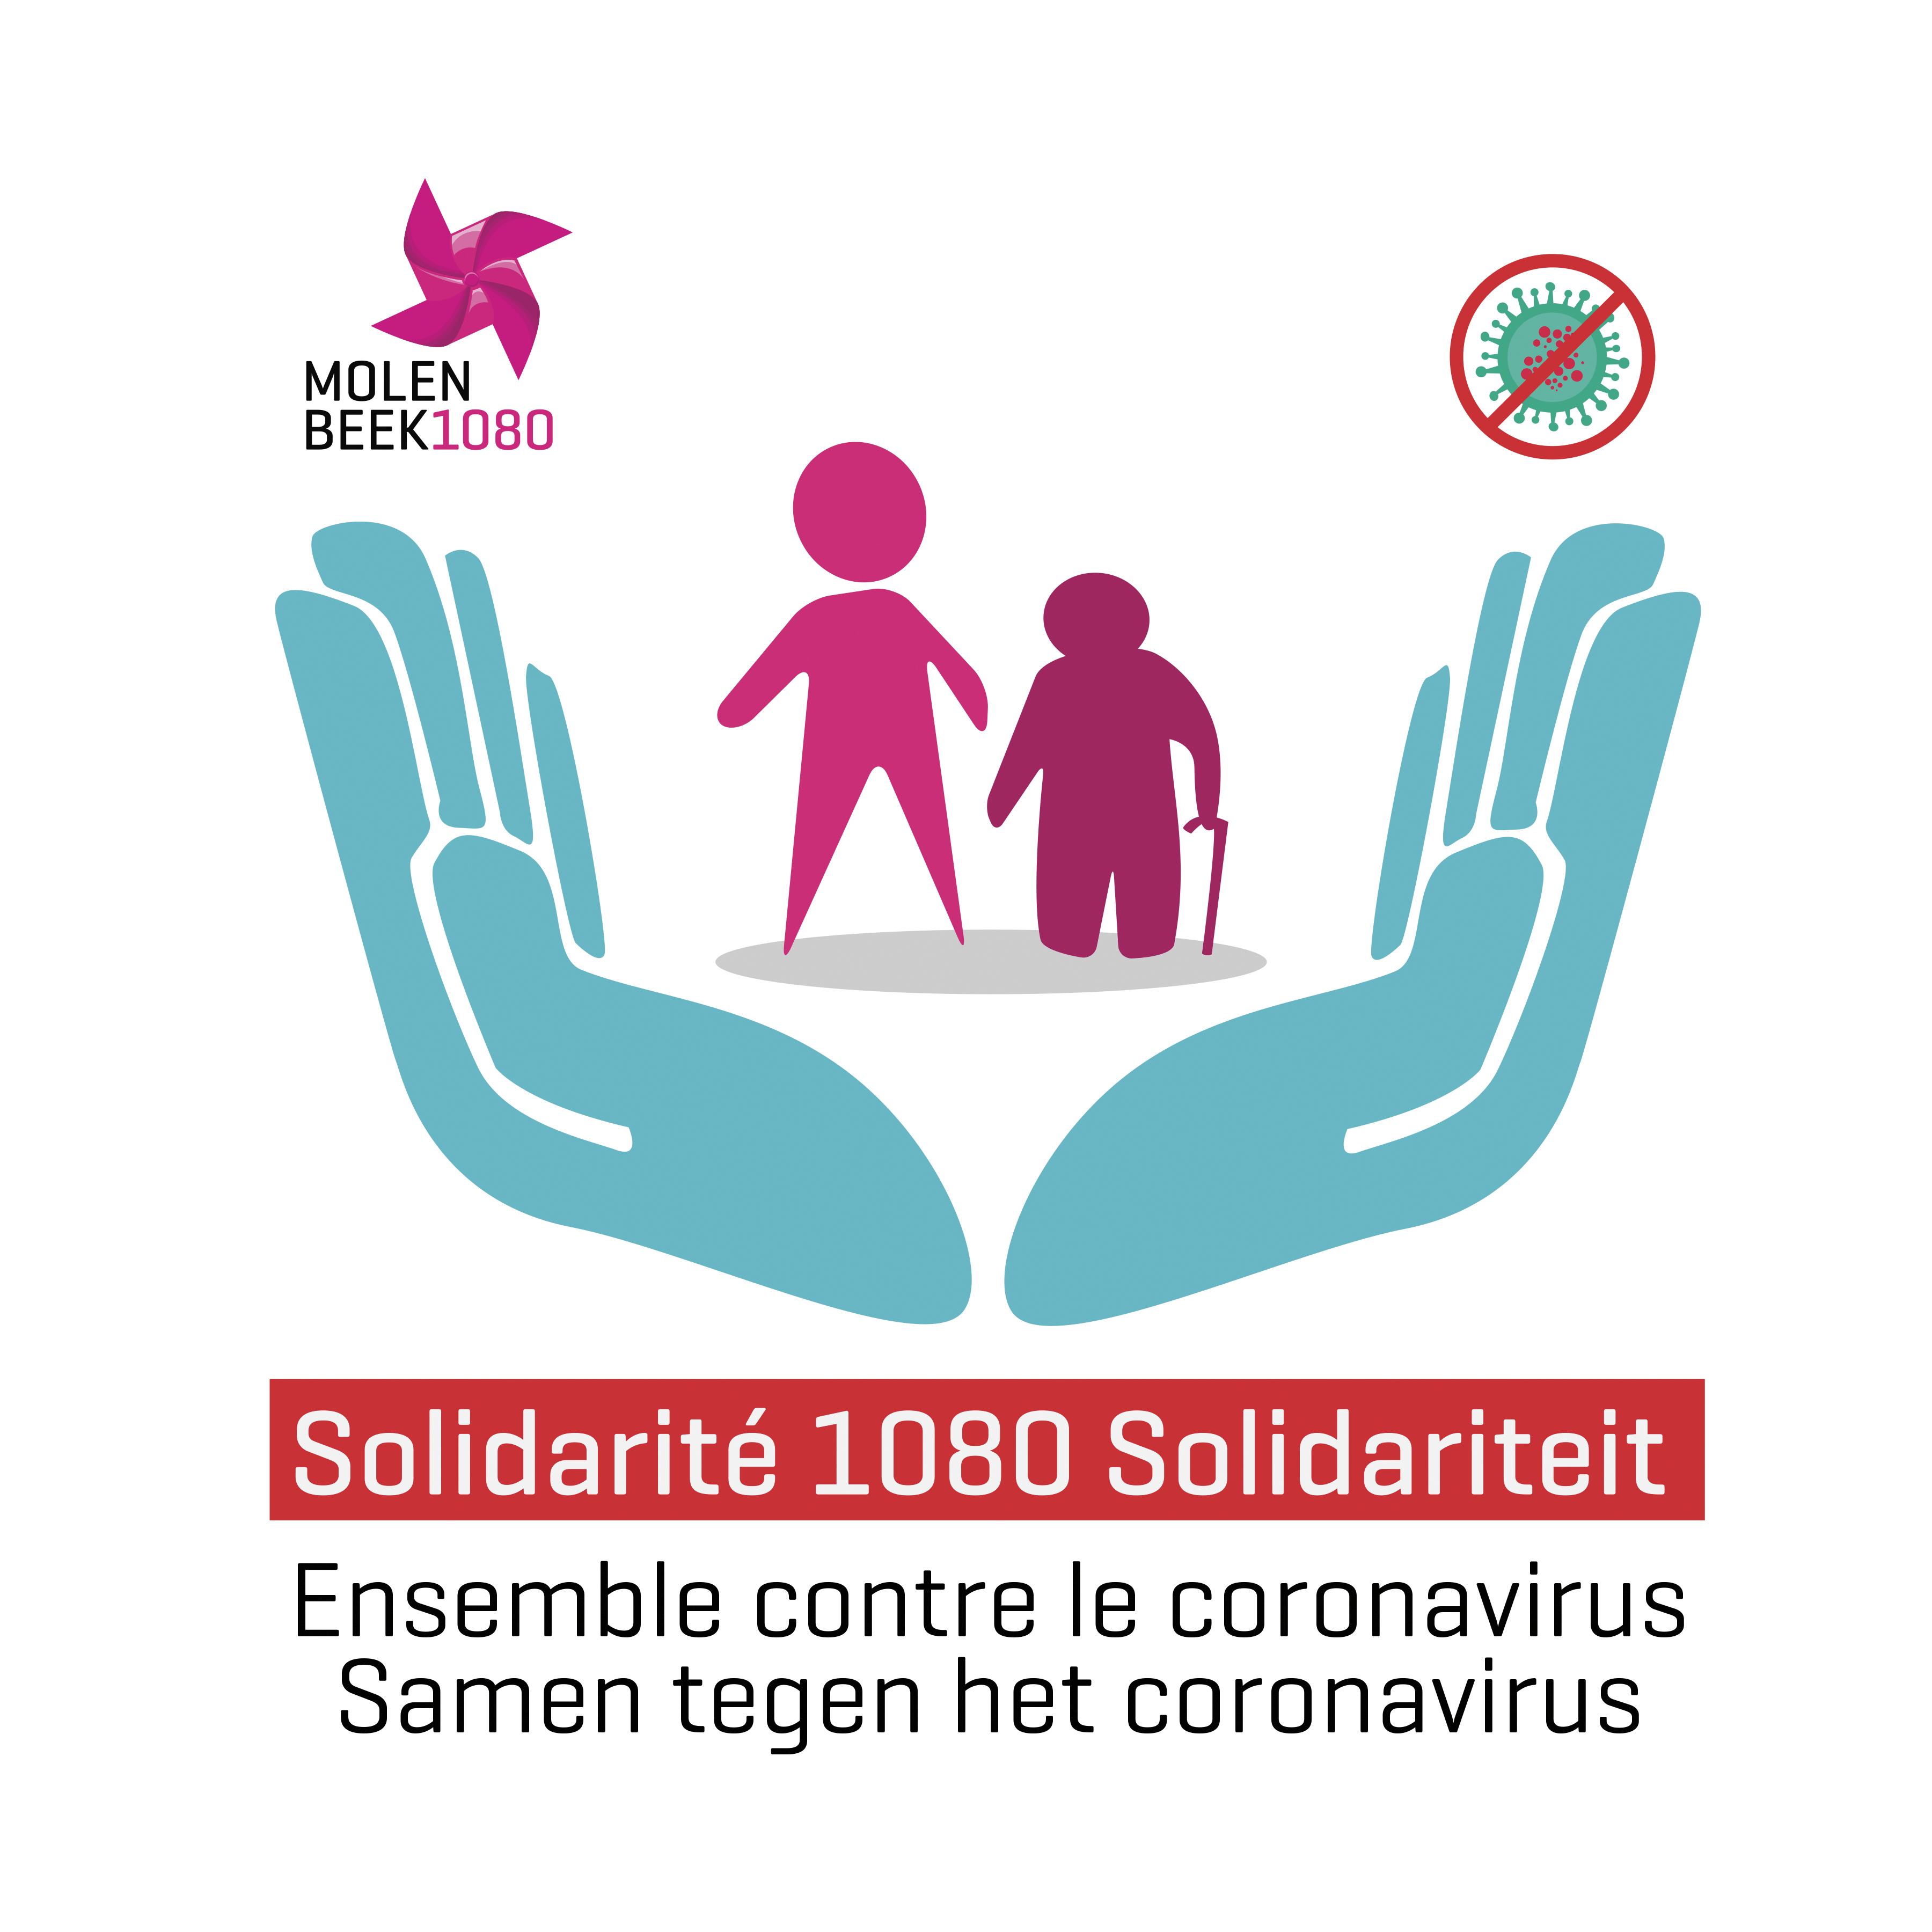 Molenbeek logo Solidarite1080solidariteit